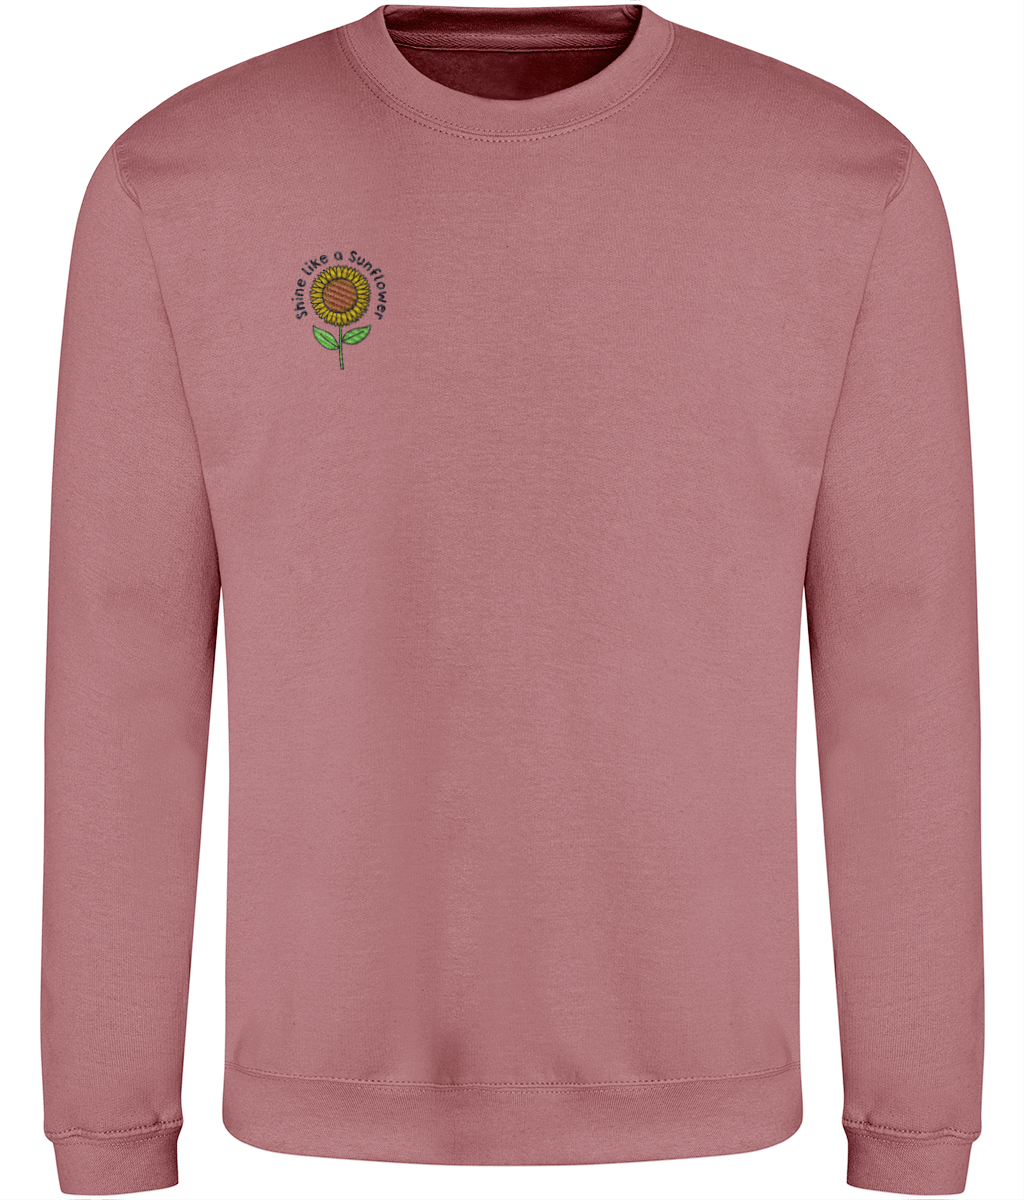 Shine Like A Sunflower - Embroidered - Adult Sweatshirt - Multi Colour Options